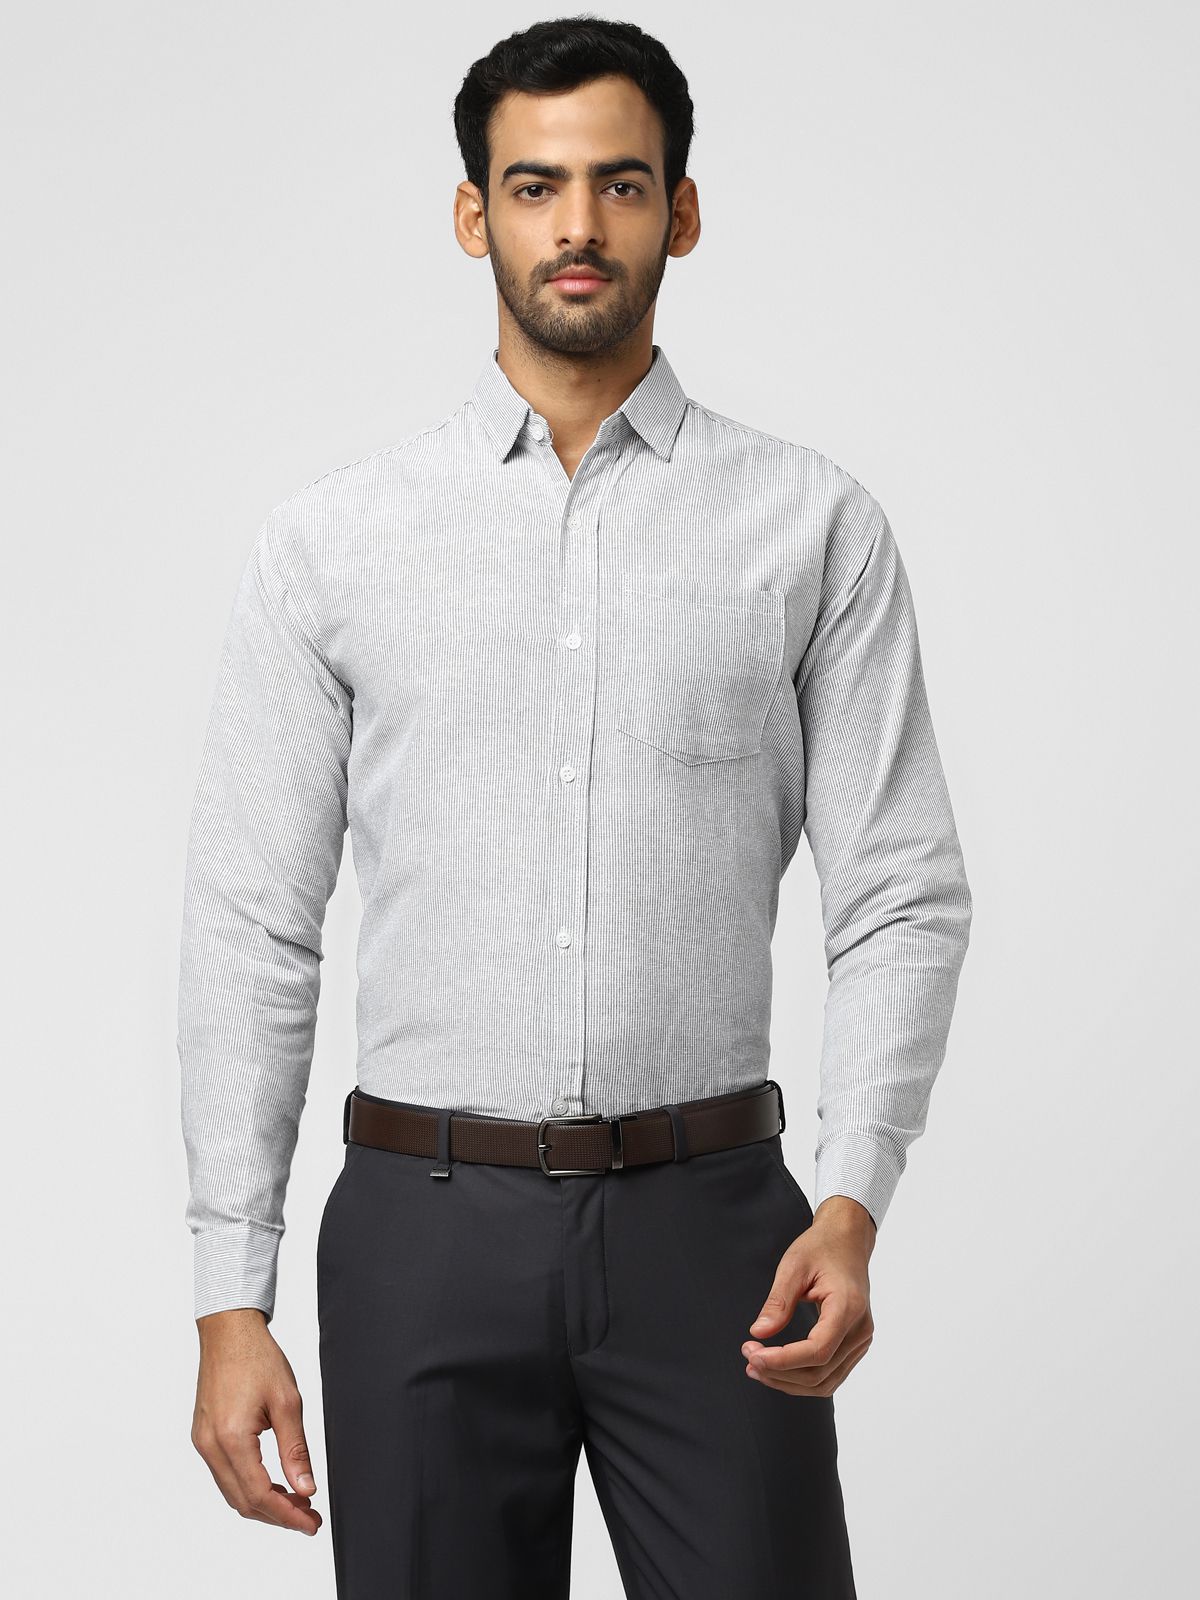     			DESHBANDHU DBK - Grey Cotton Regular Fit Men's Casual Shirt ( Pack of 1 )